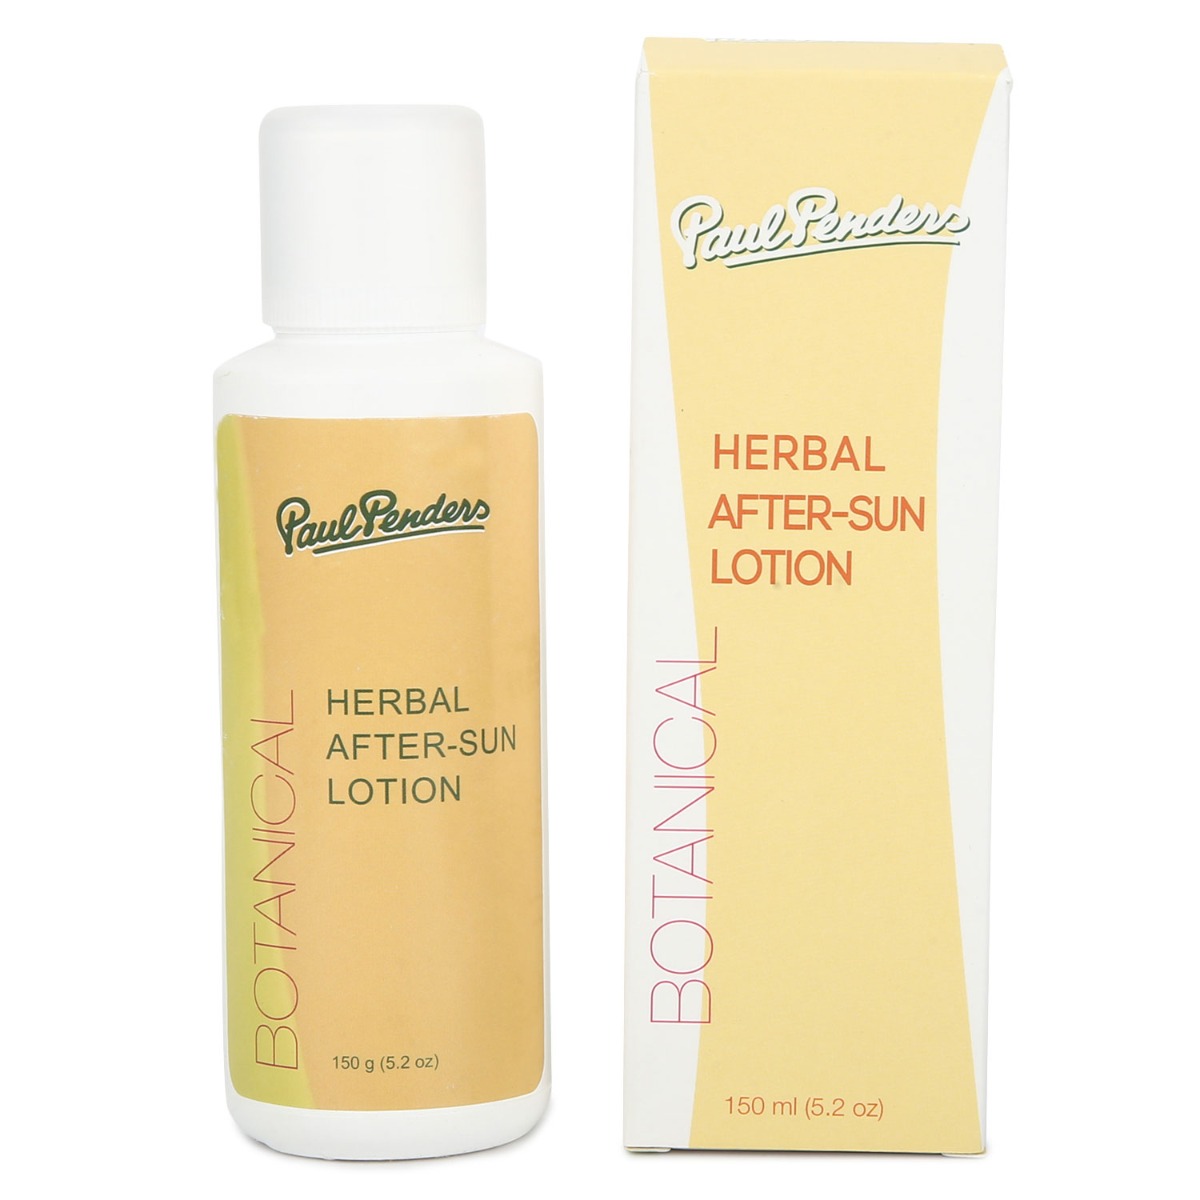 Paul Penders Herbal After-Sun Lotion, 150ml